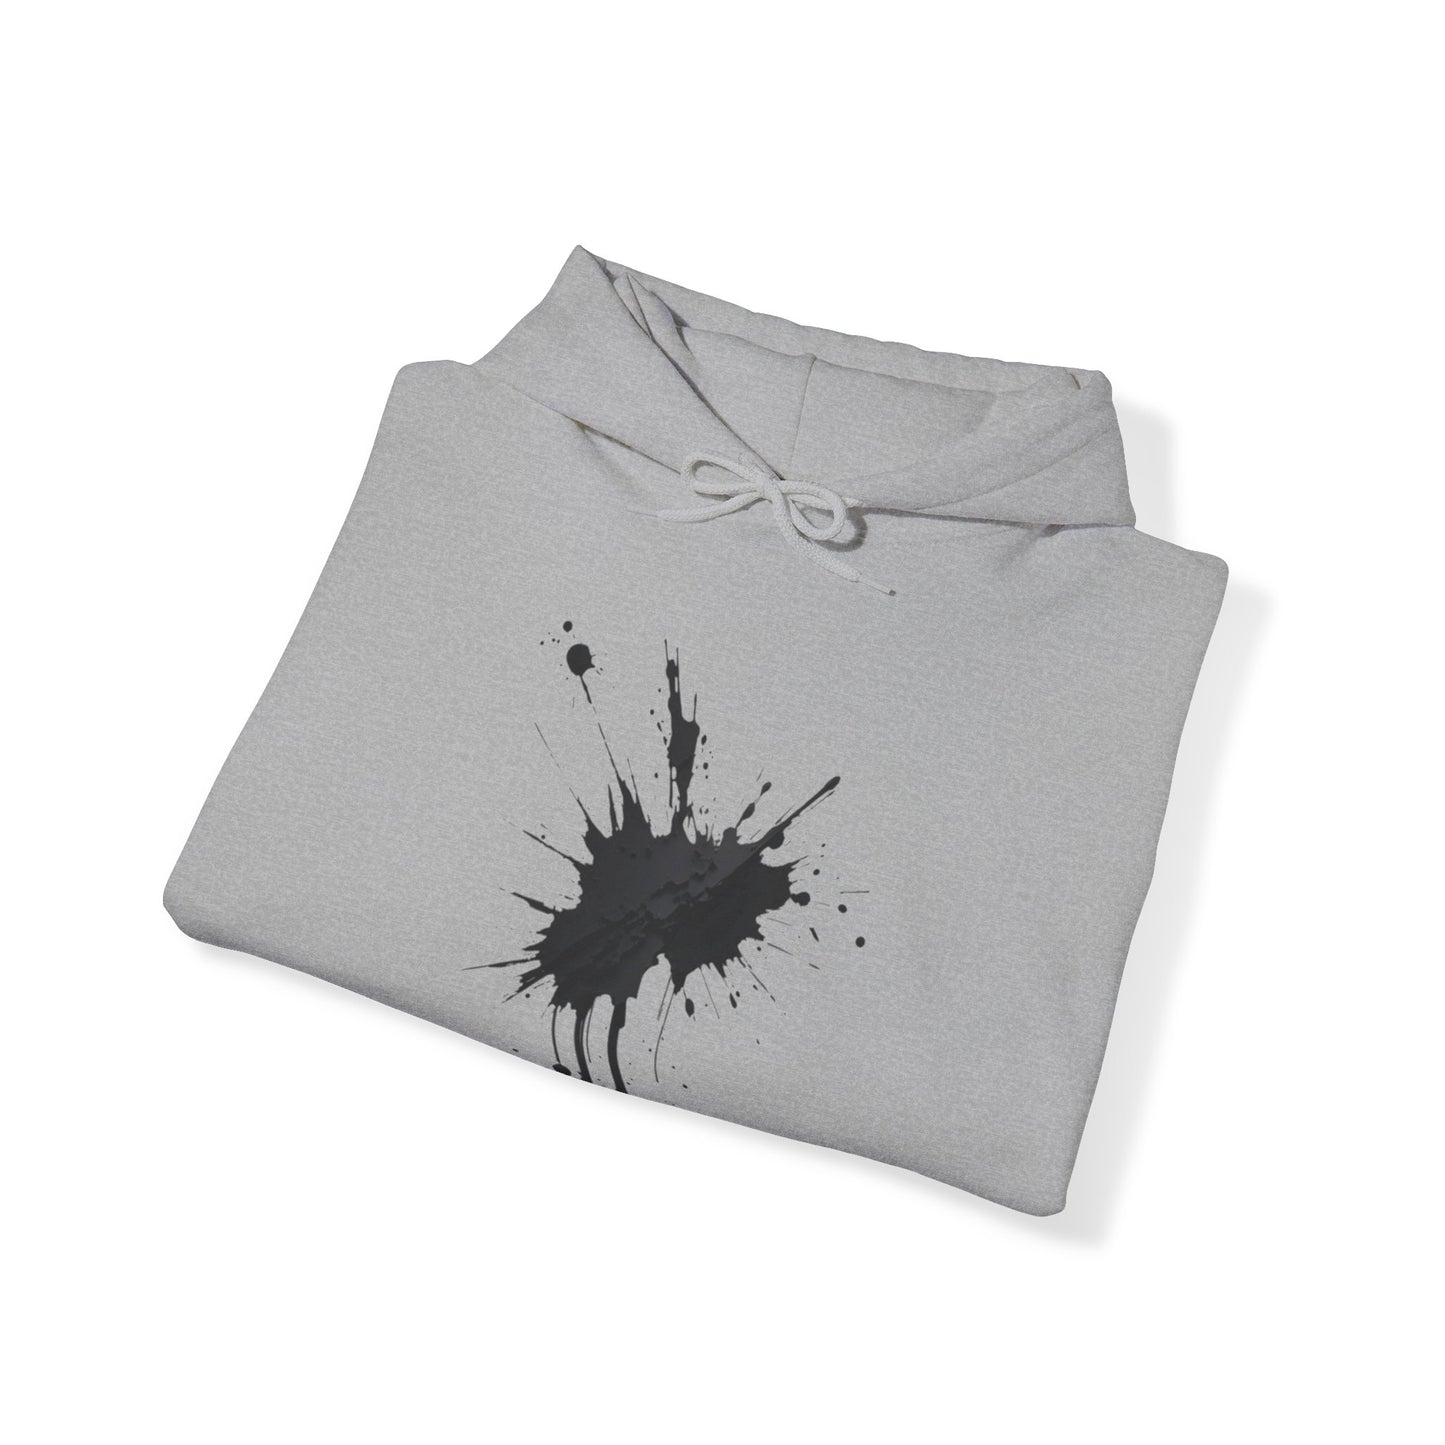 Paint Splatter Art - Unisex Hooded Sweatshirt